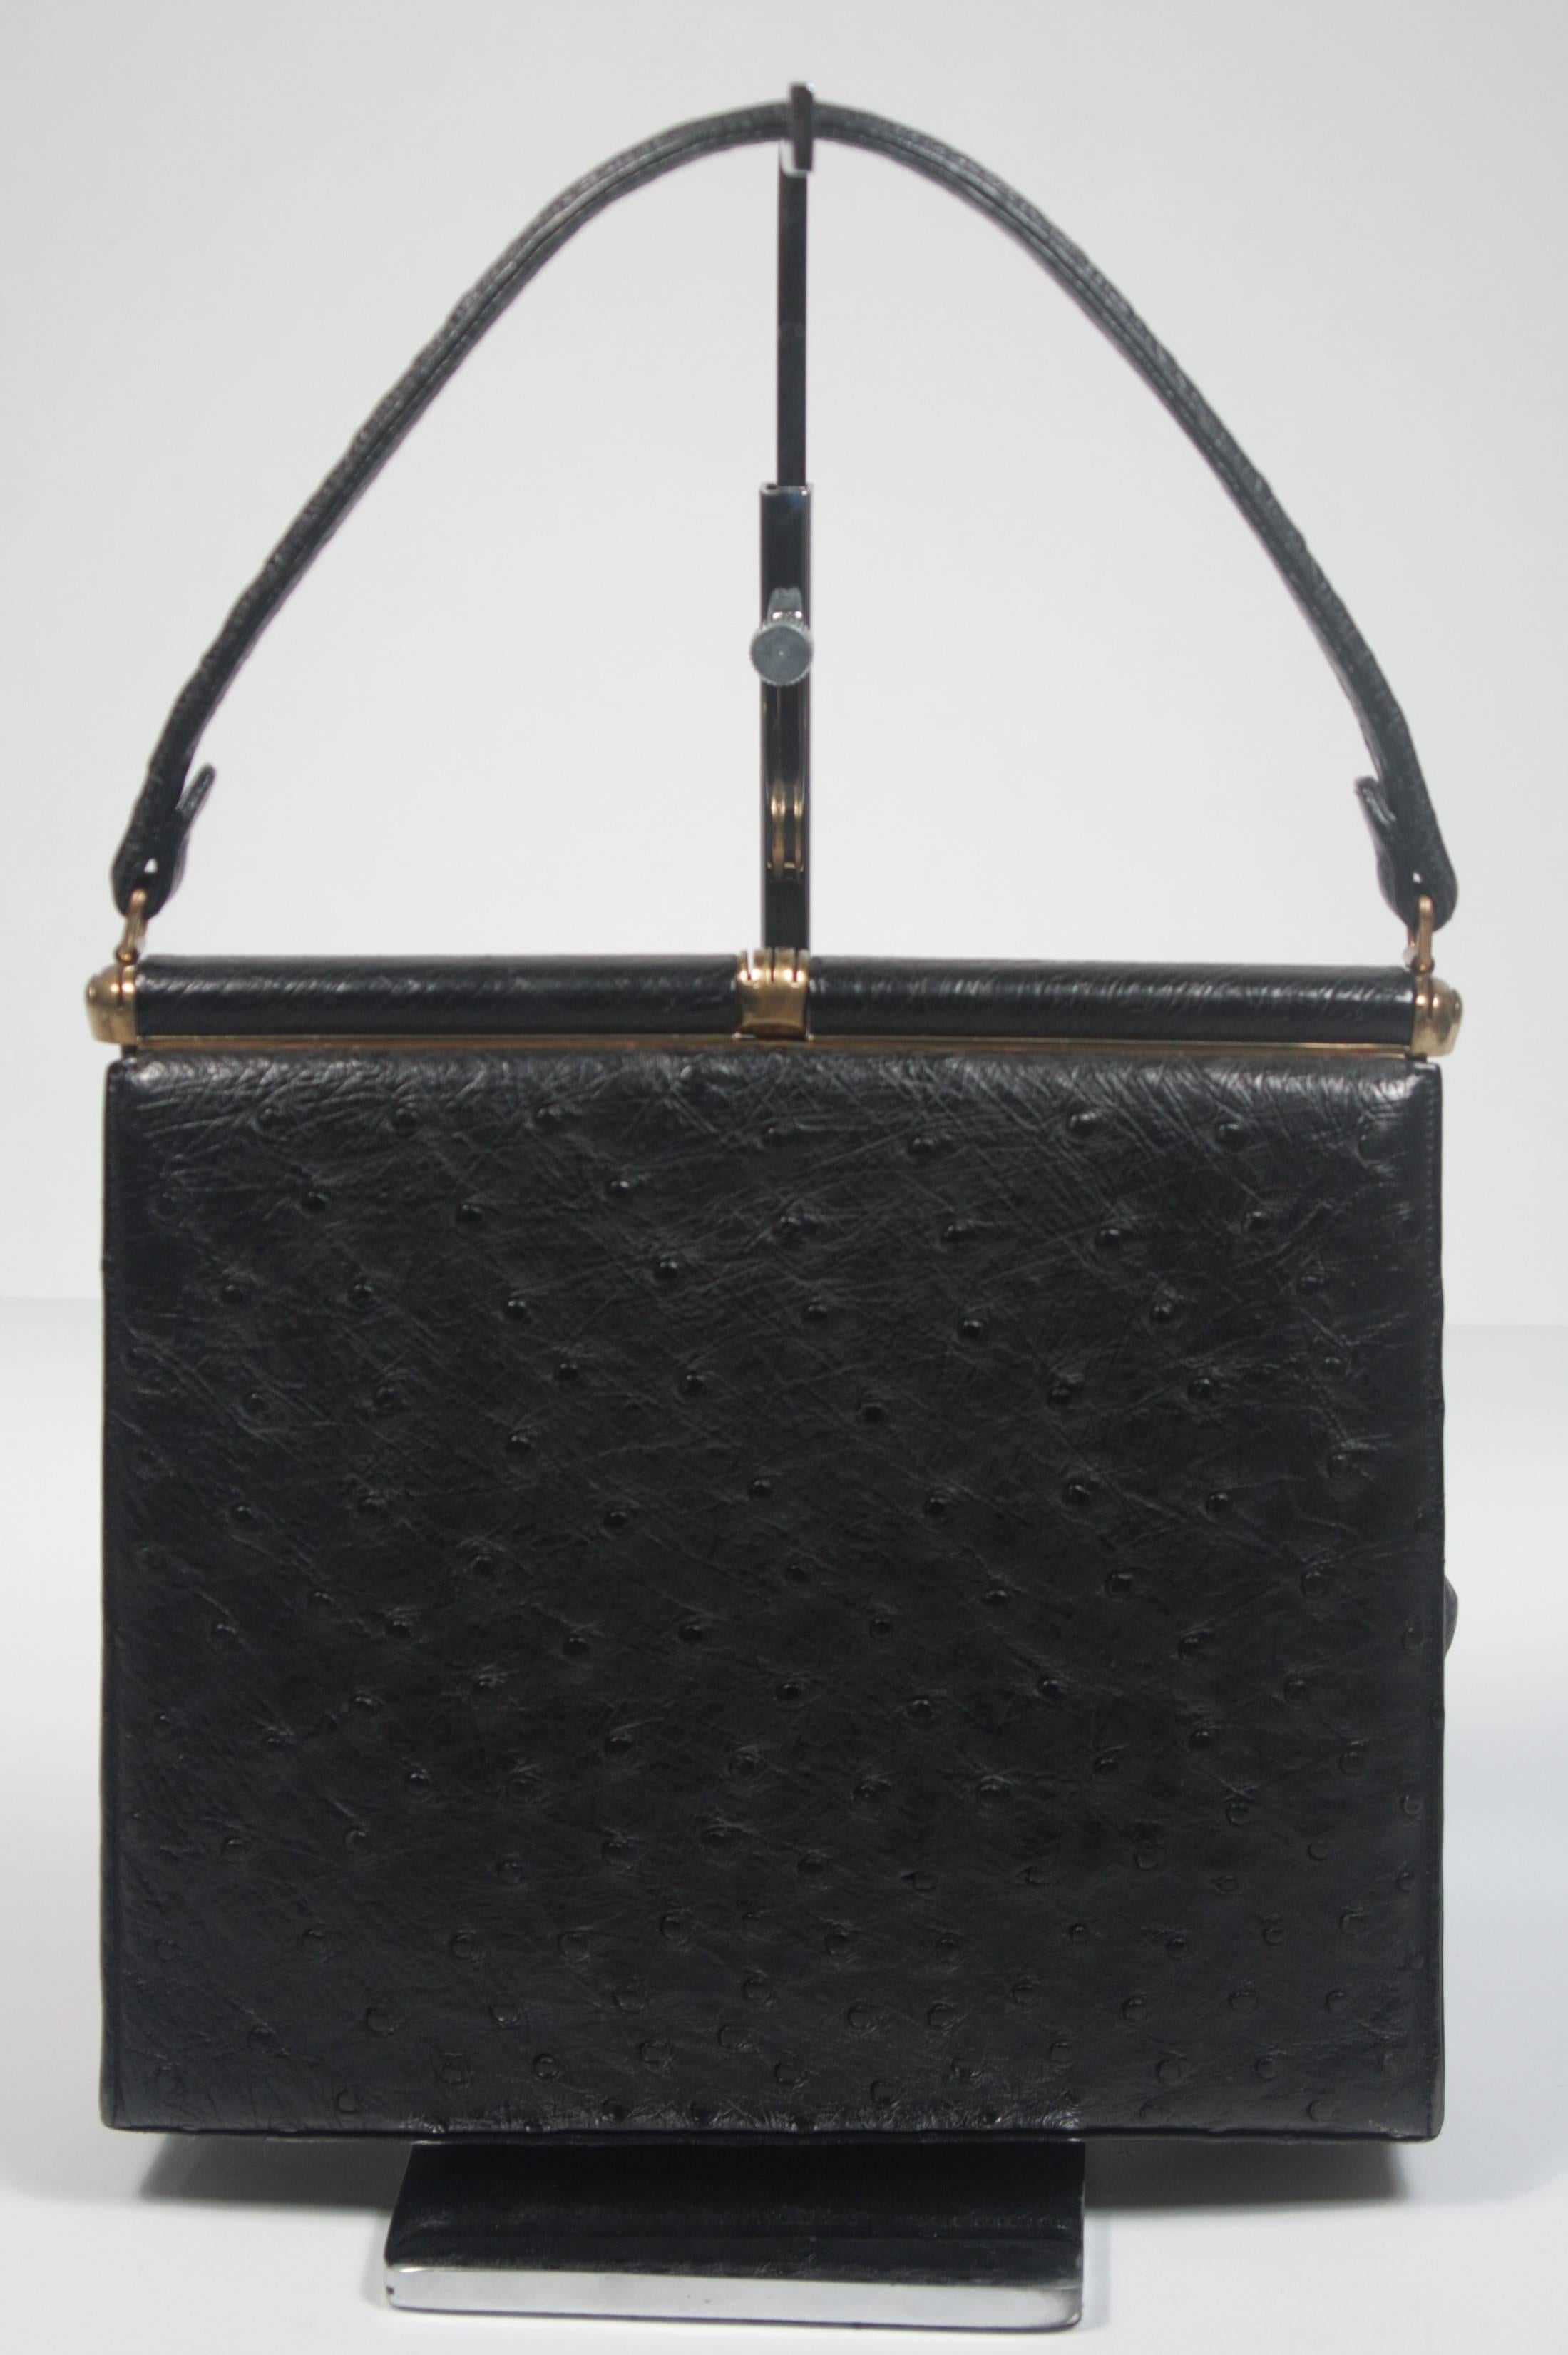 Lucille De Paris Black Ostrich Frame Handbag with Gold Hardware 2